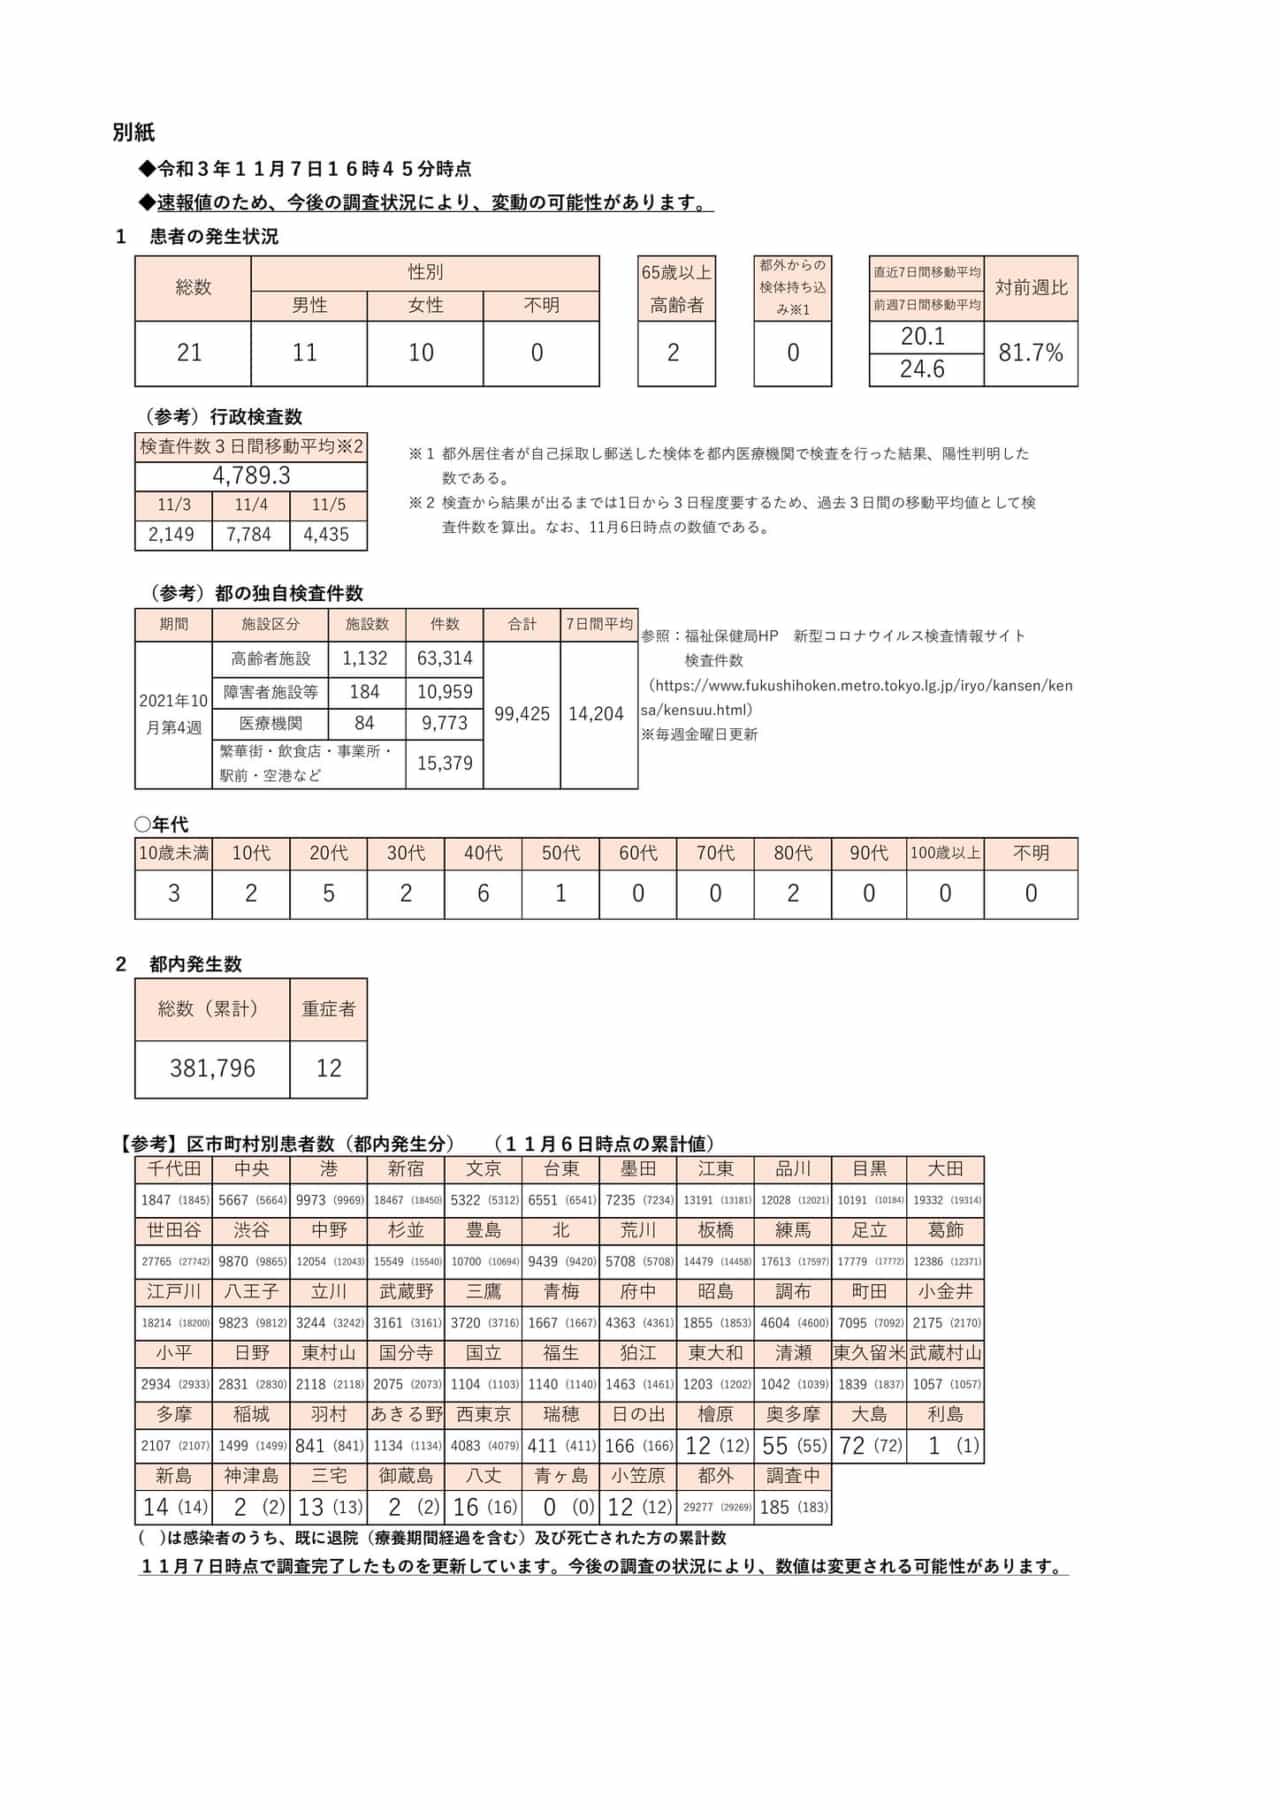 https://www.fukushihoken.metro.tokyo.lg.jp/hodo/saishin/corona2650.files/2650.pdf